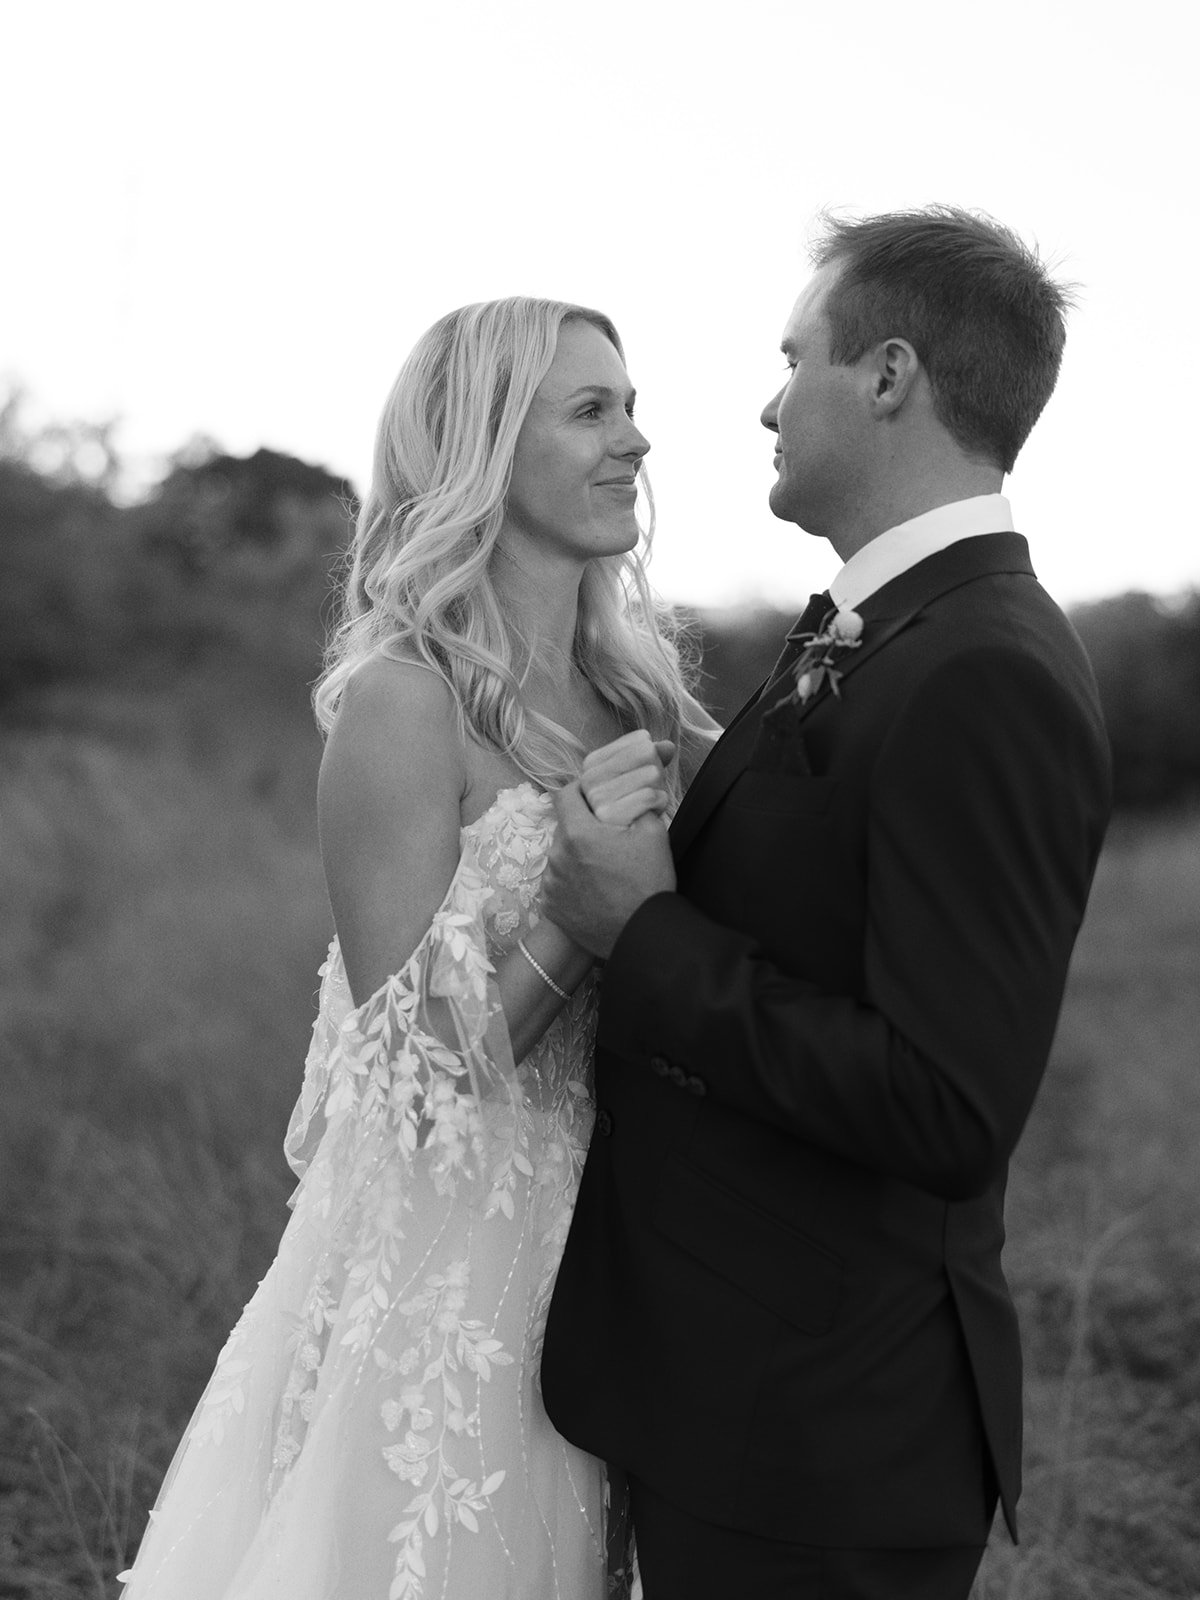 Best-Austin-Wedding-Photographers-Elopement-Film-35mm-Asheville-Santa-Barbara-Backyard-120.jpg